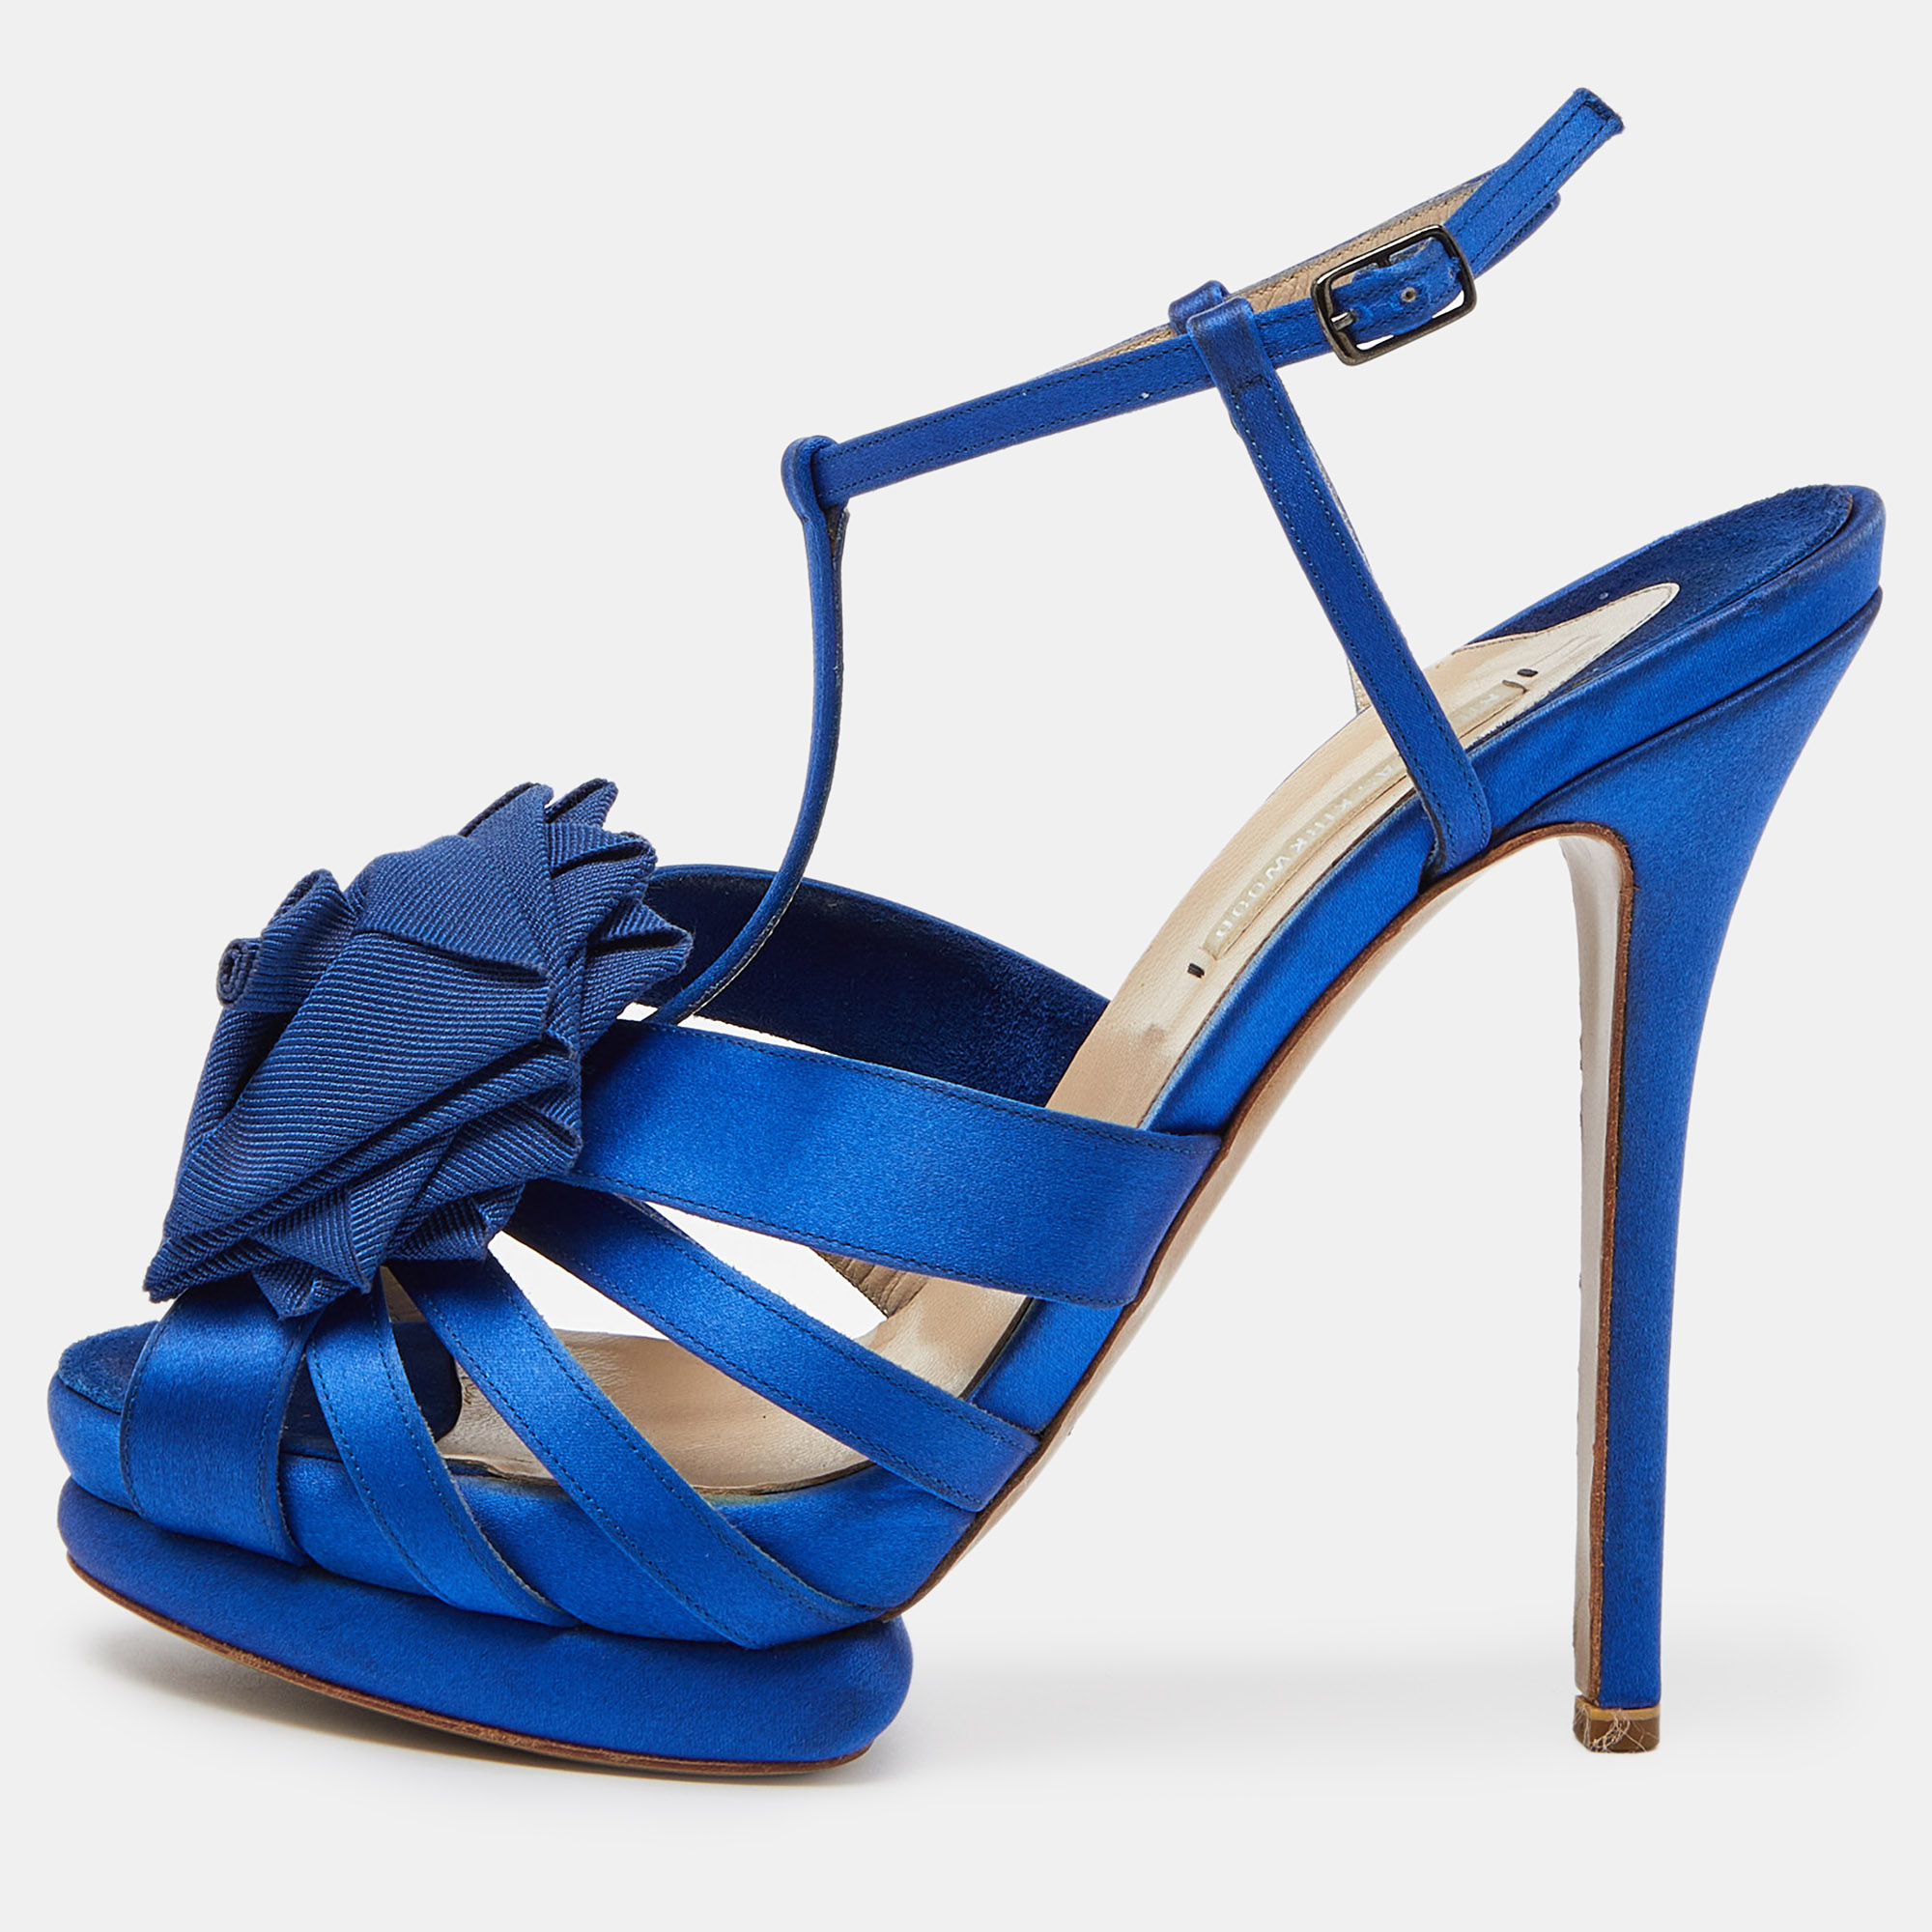 Nicholas kirkwood blue satin platform ankle strap sandals size 39